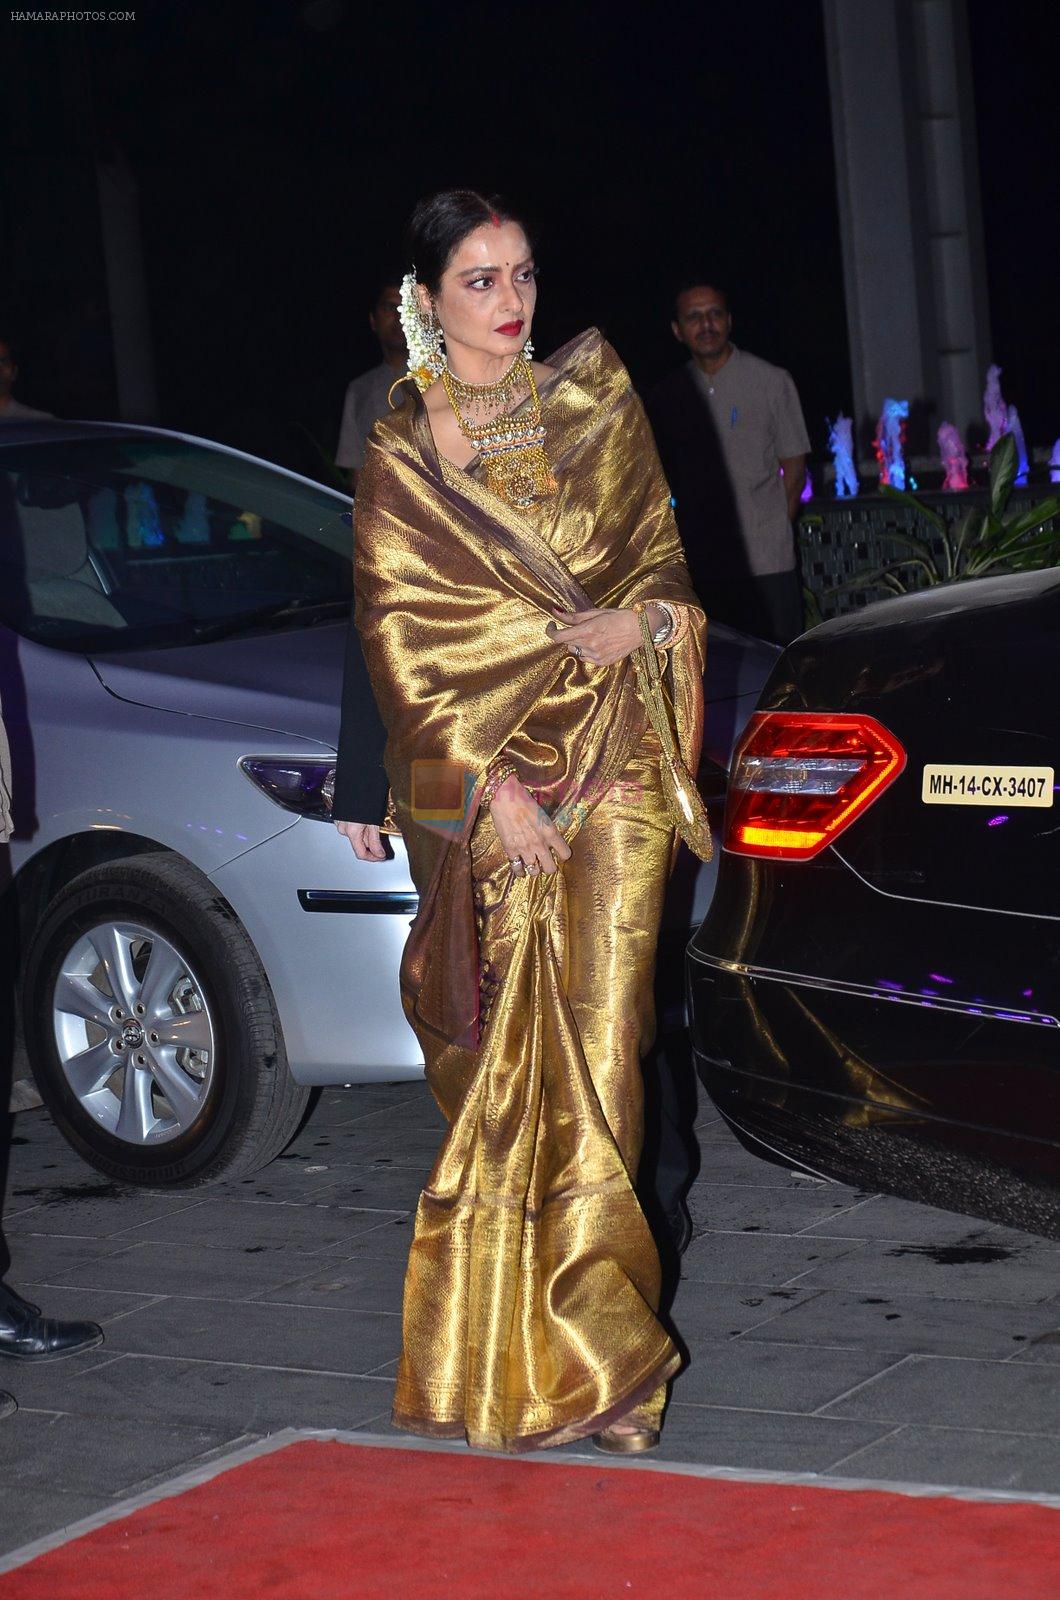 Rekha at Kush Wedding Reception in Sahara Star, Mumbai on 19th Jan 2015